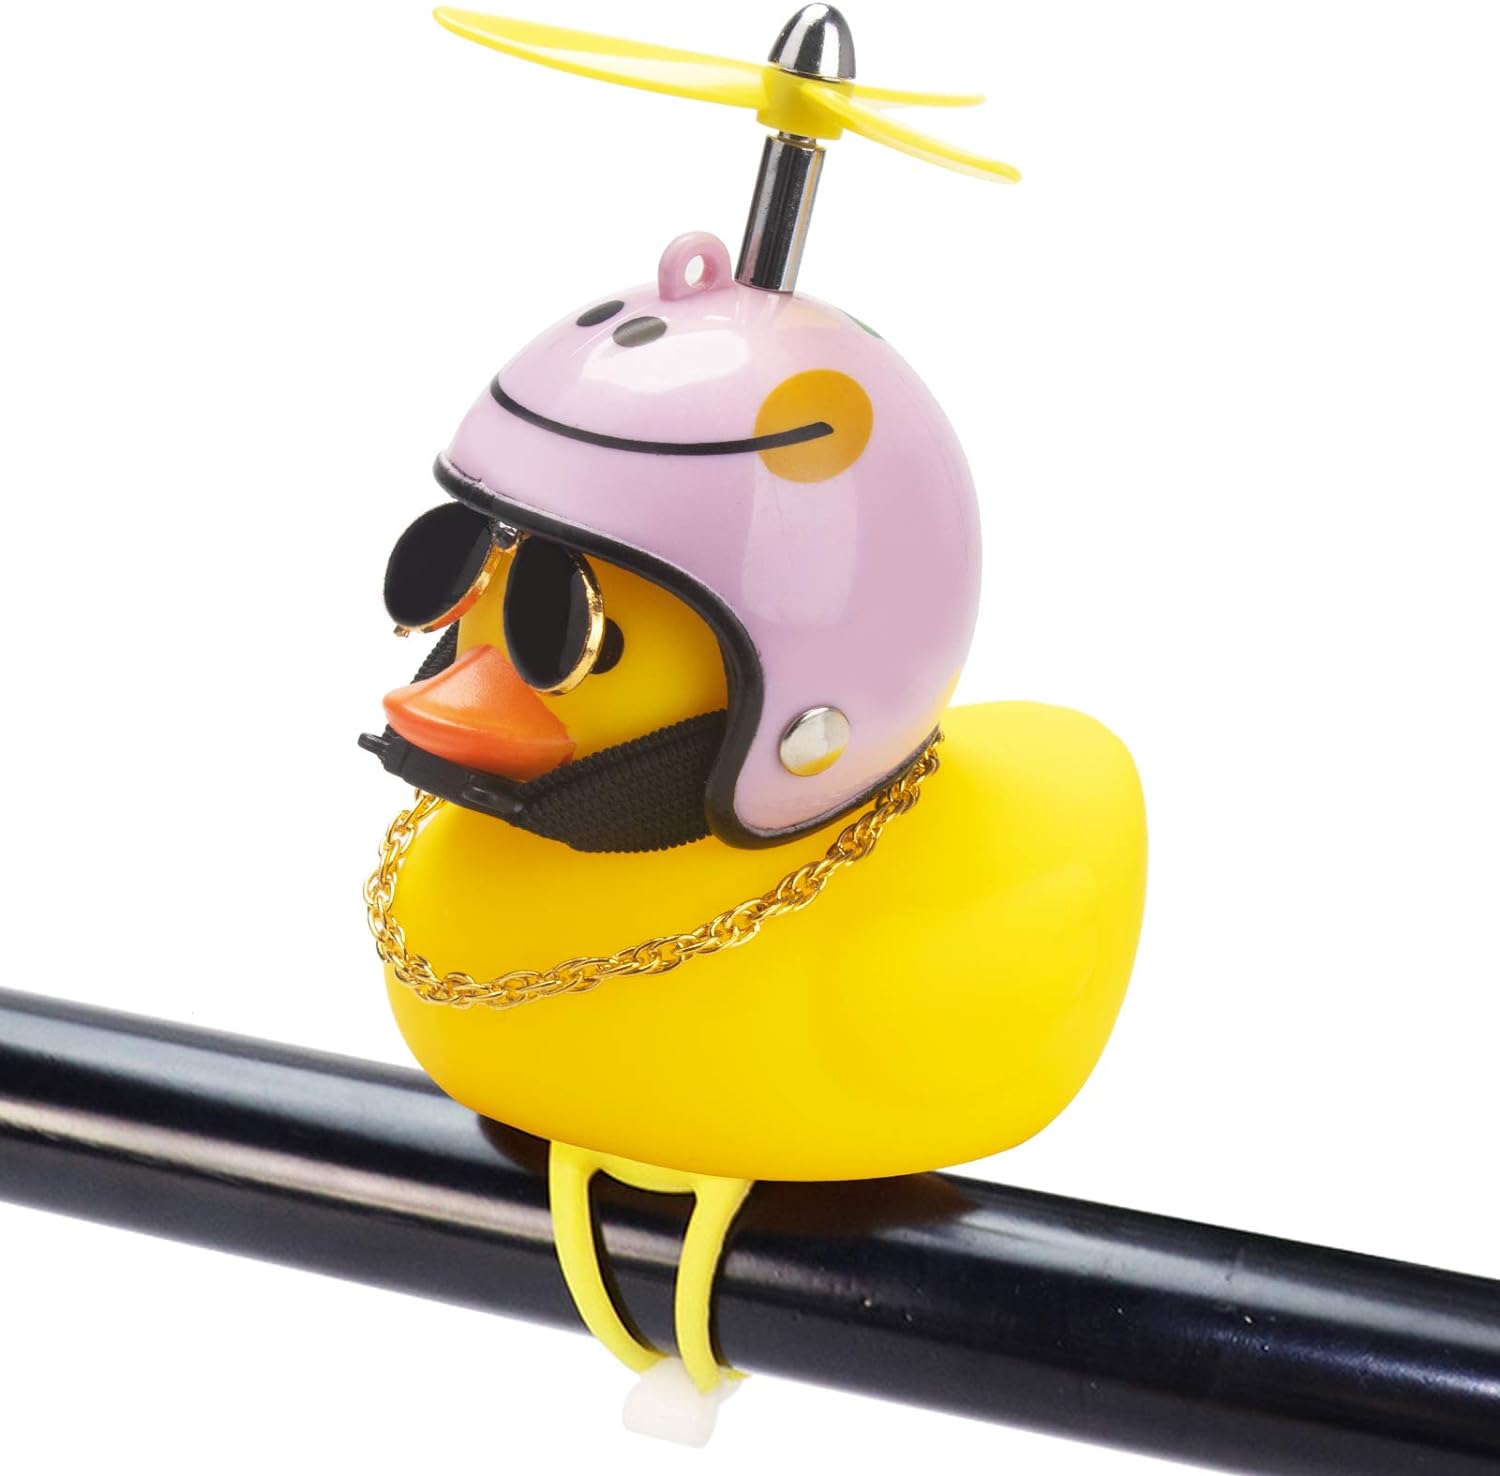 Rubber Duck Car Ornament Review